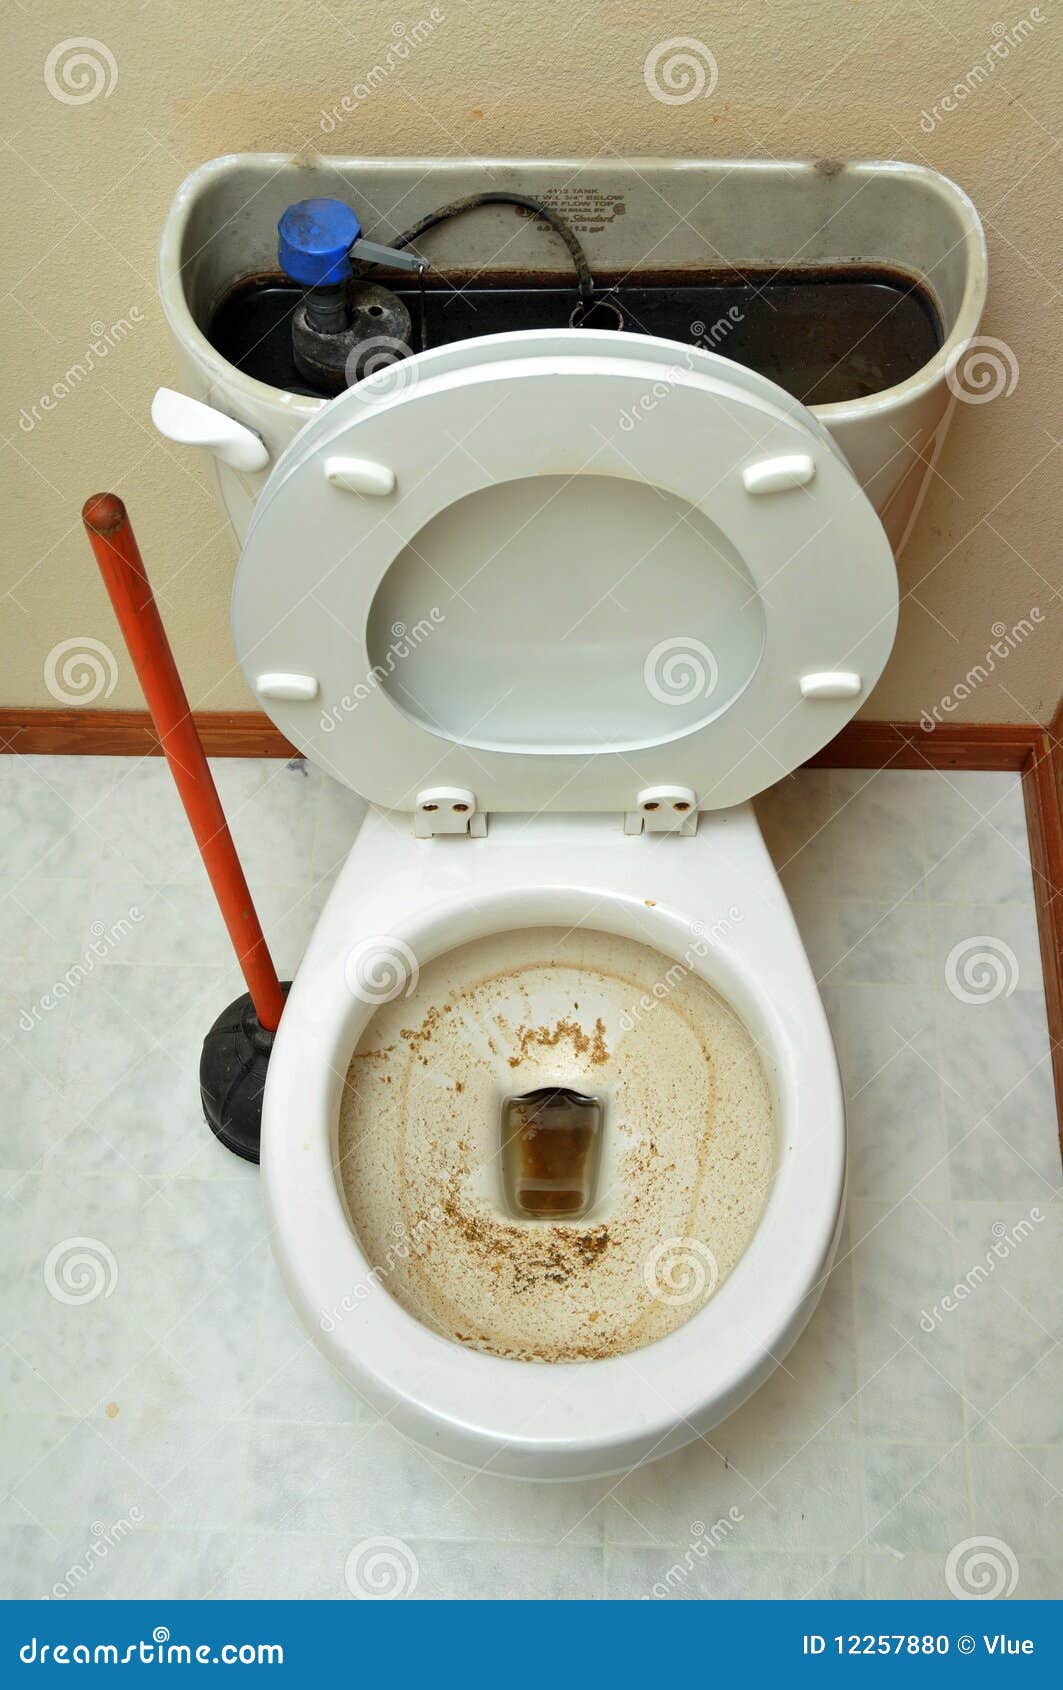 worst clogged toilet